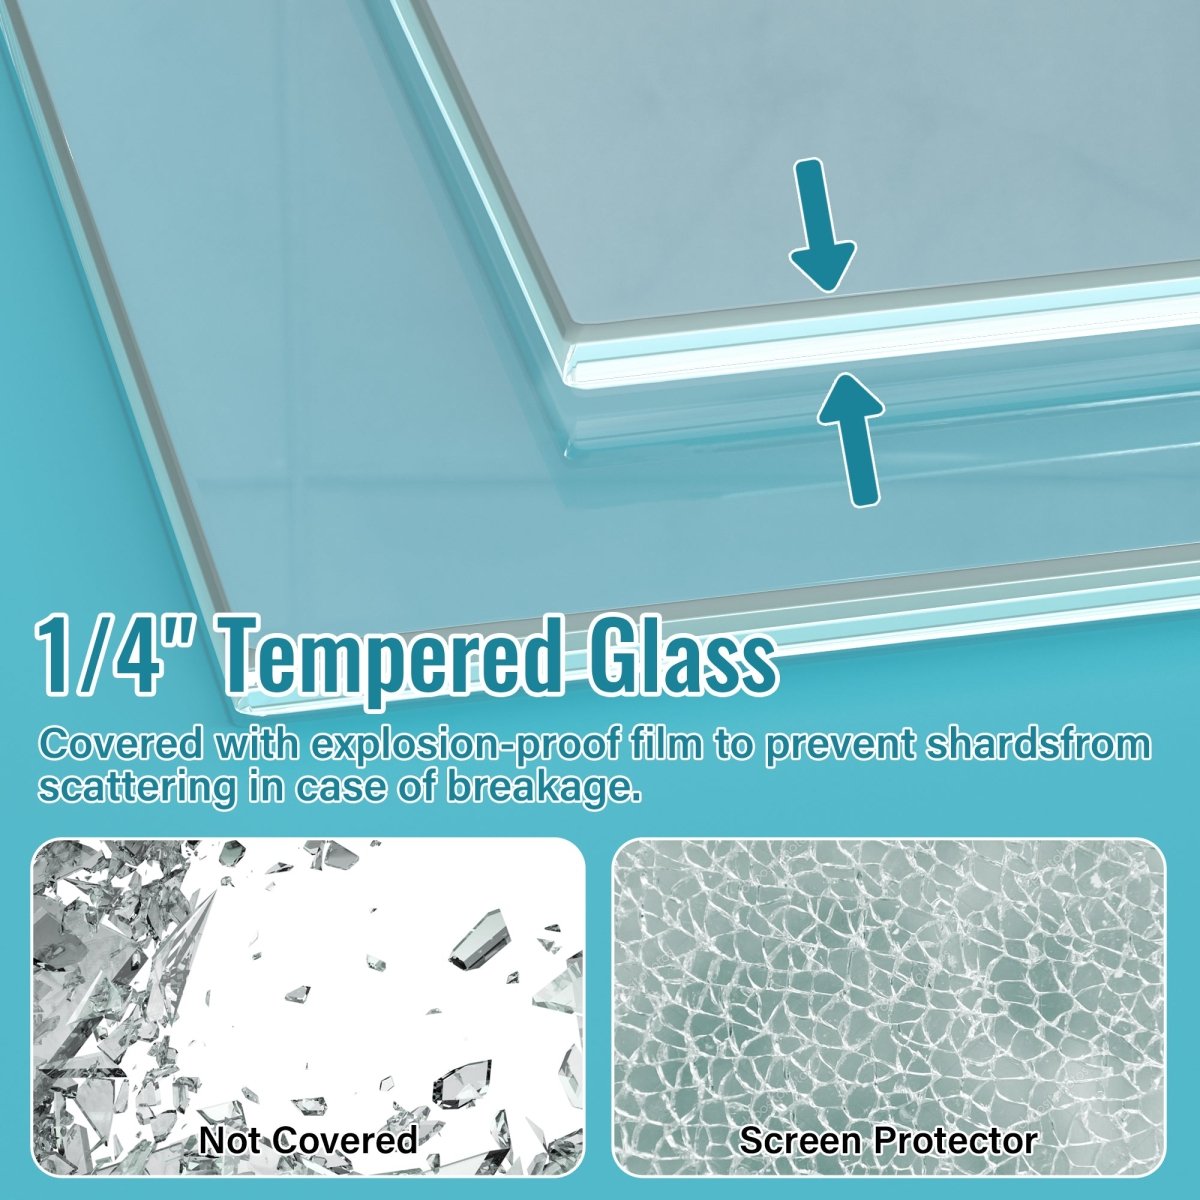 ExBrite 36" x 72" Pivot Corner Shower Door in Chrome,Clear Tempered Glass